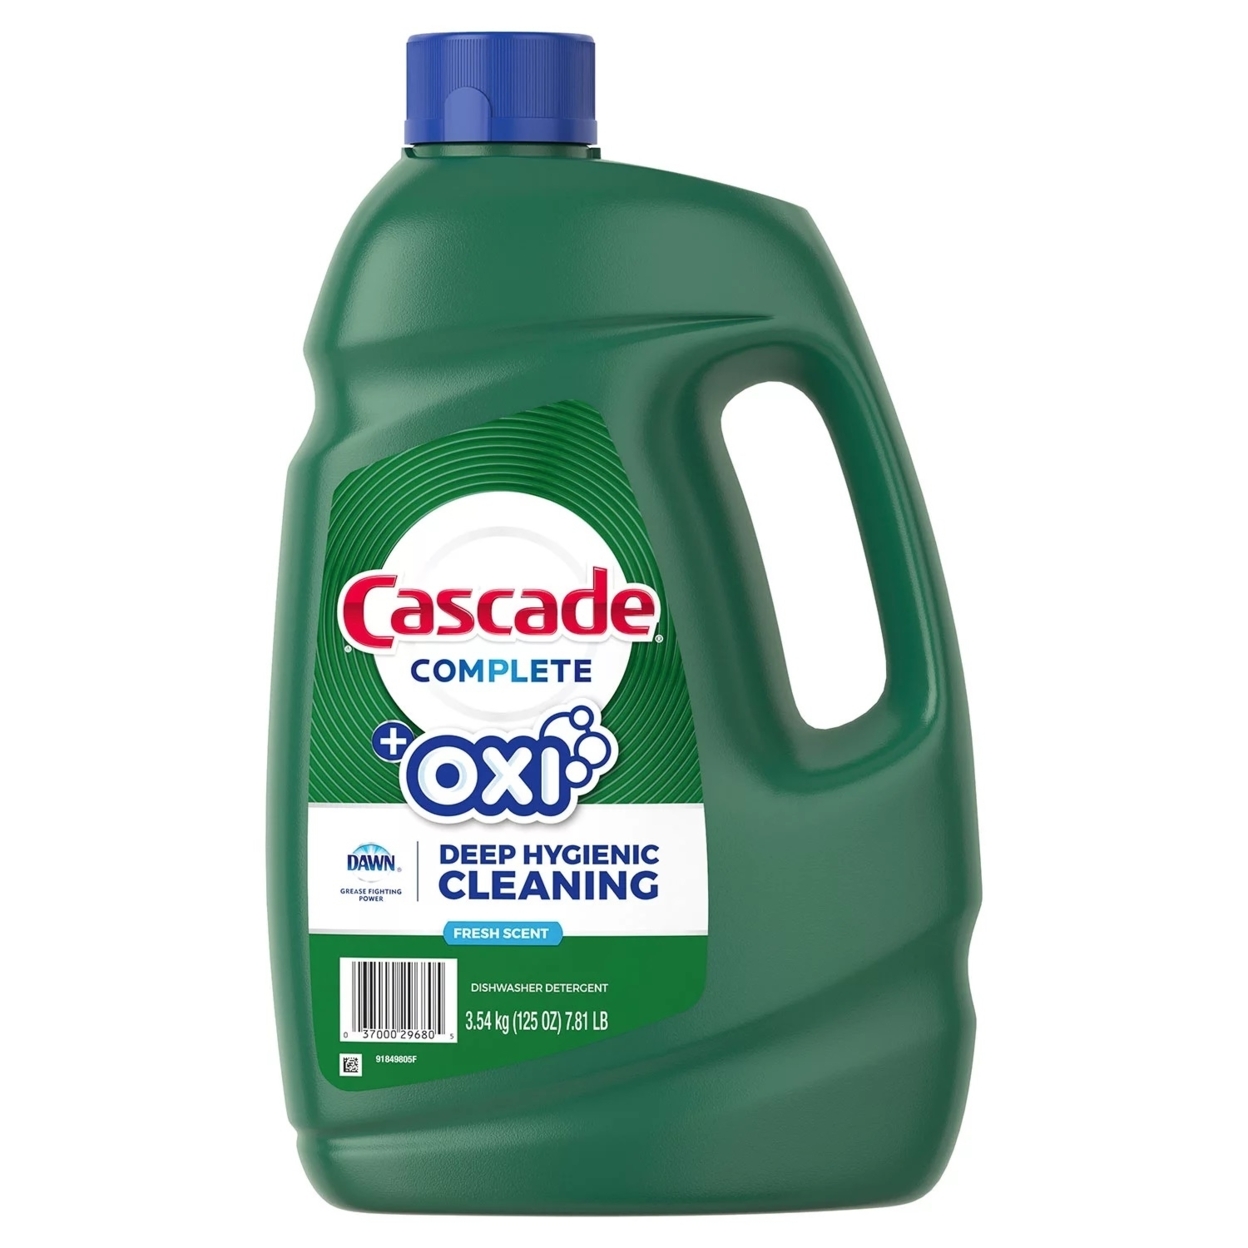 Cascade Complete Gel + Oxi, Dishwasher Detergent (125 Ounce)